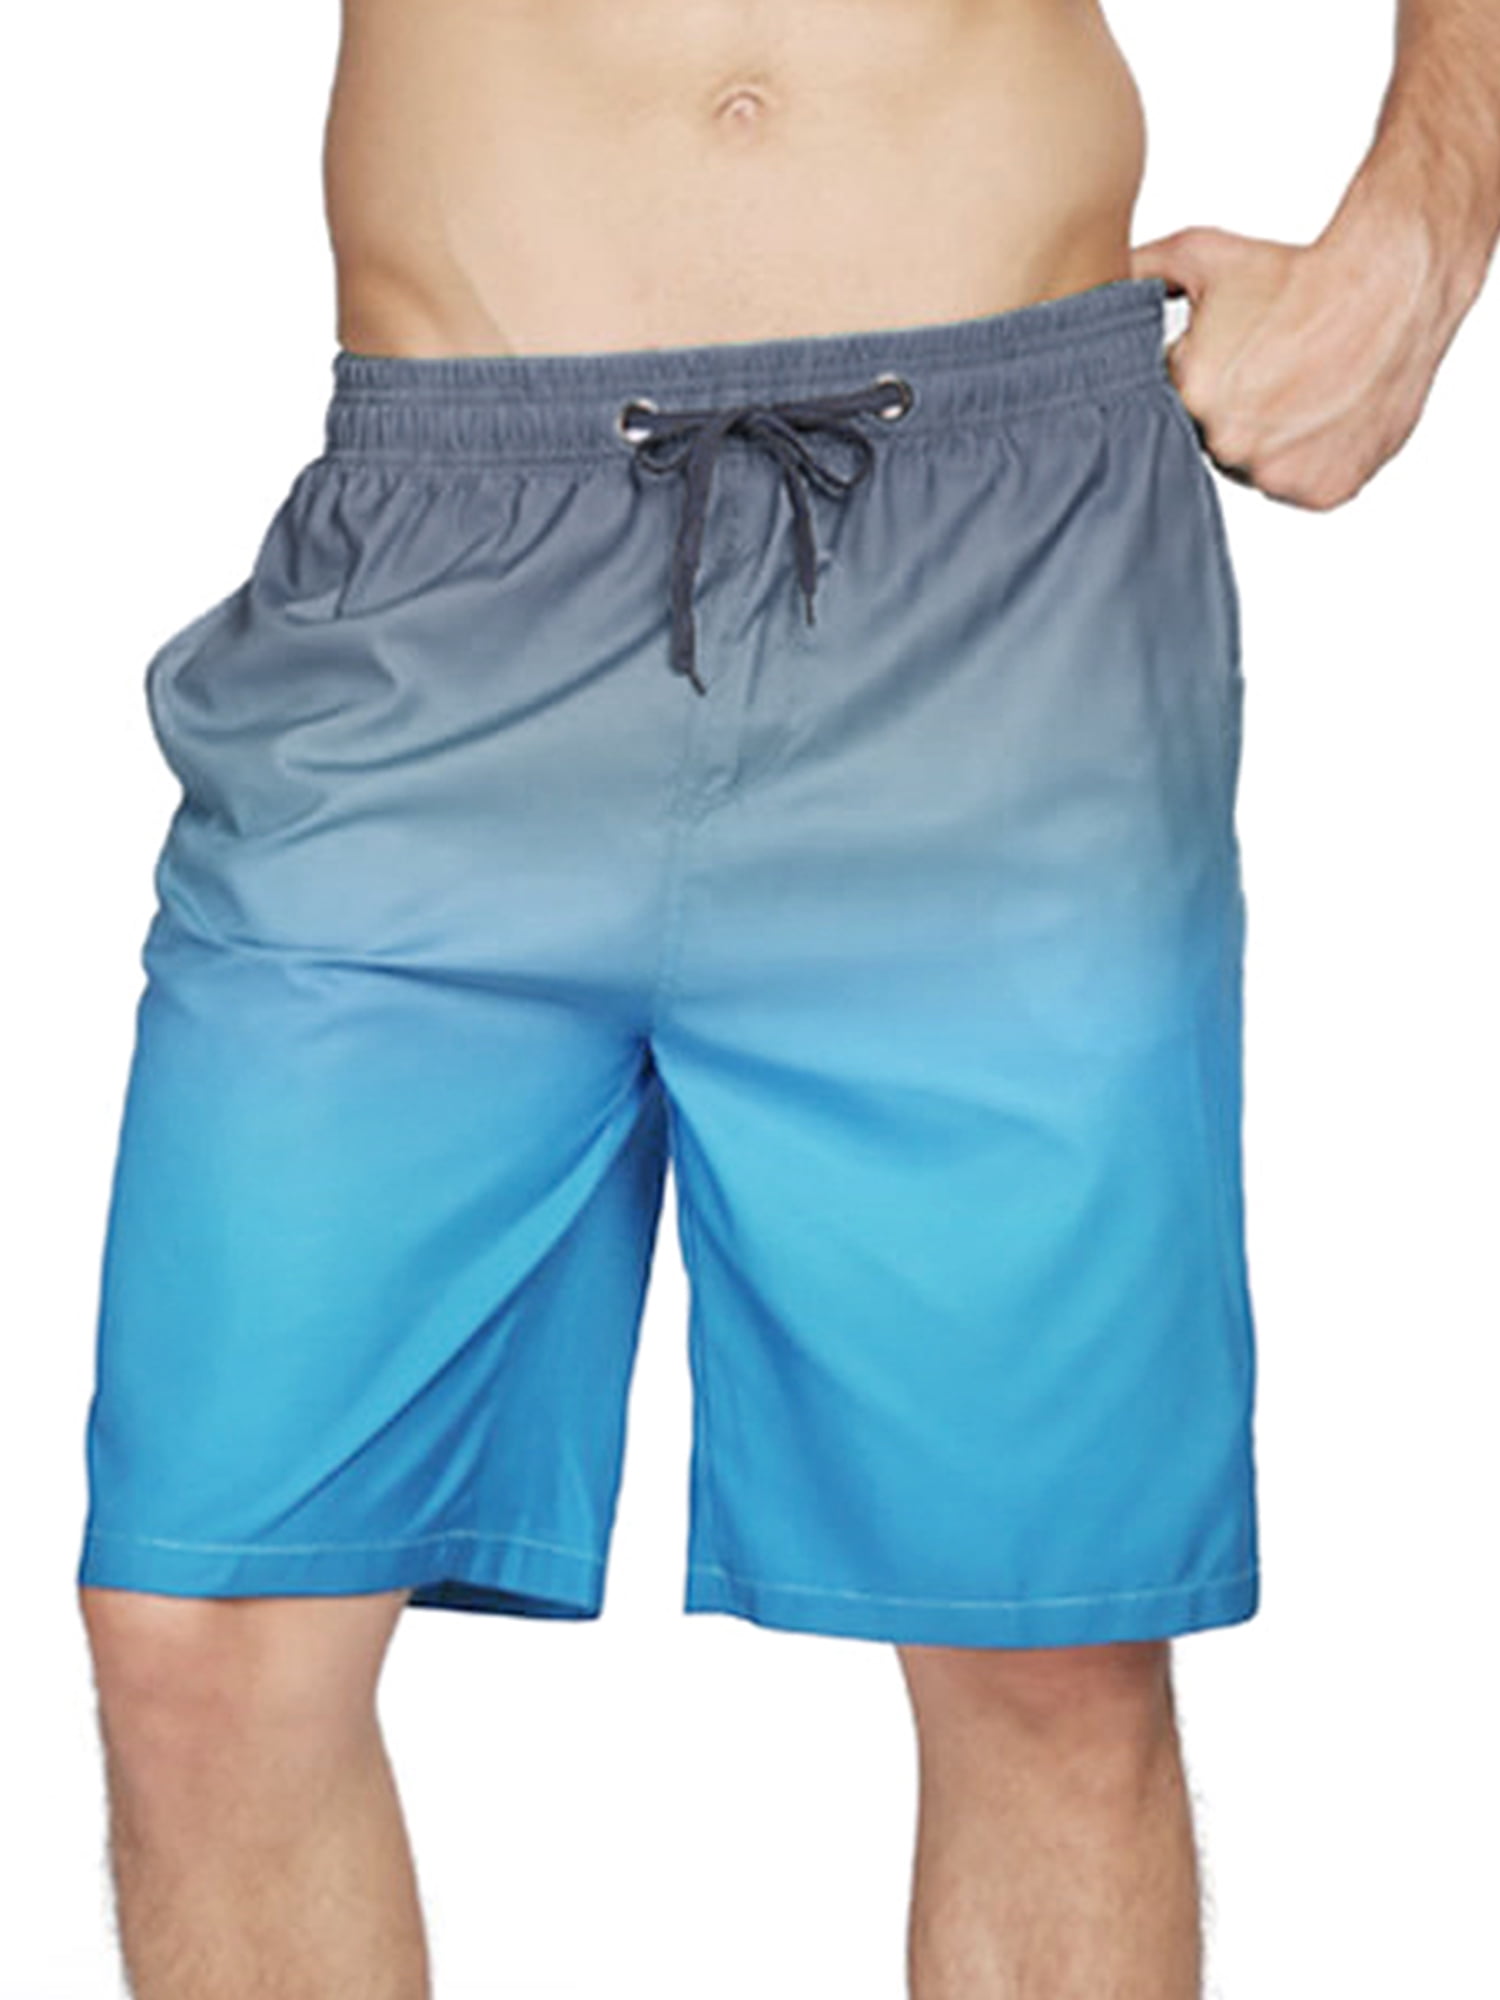 Beach summer surf board Mens Womens hot new swimsuit trunks shorts short pants